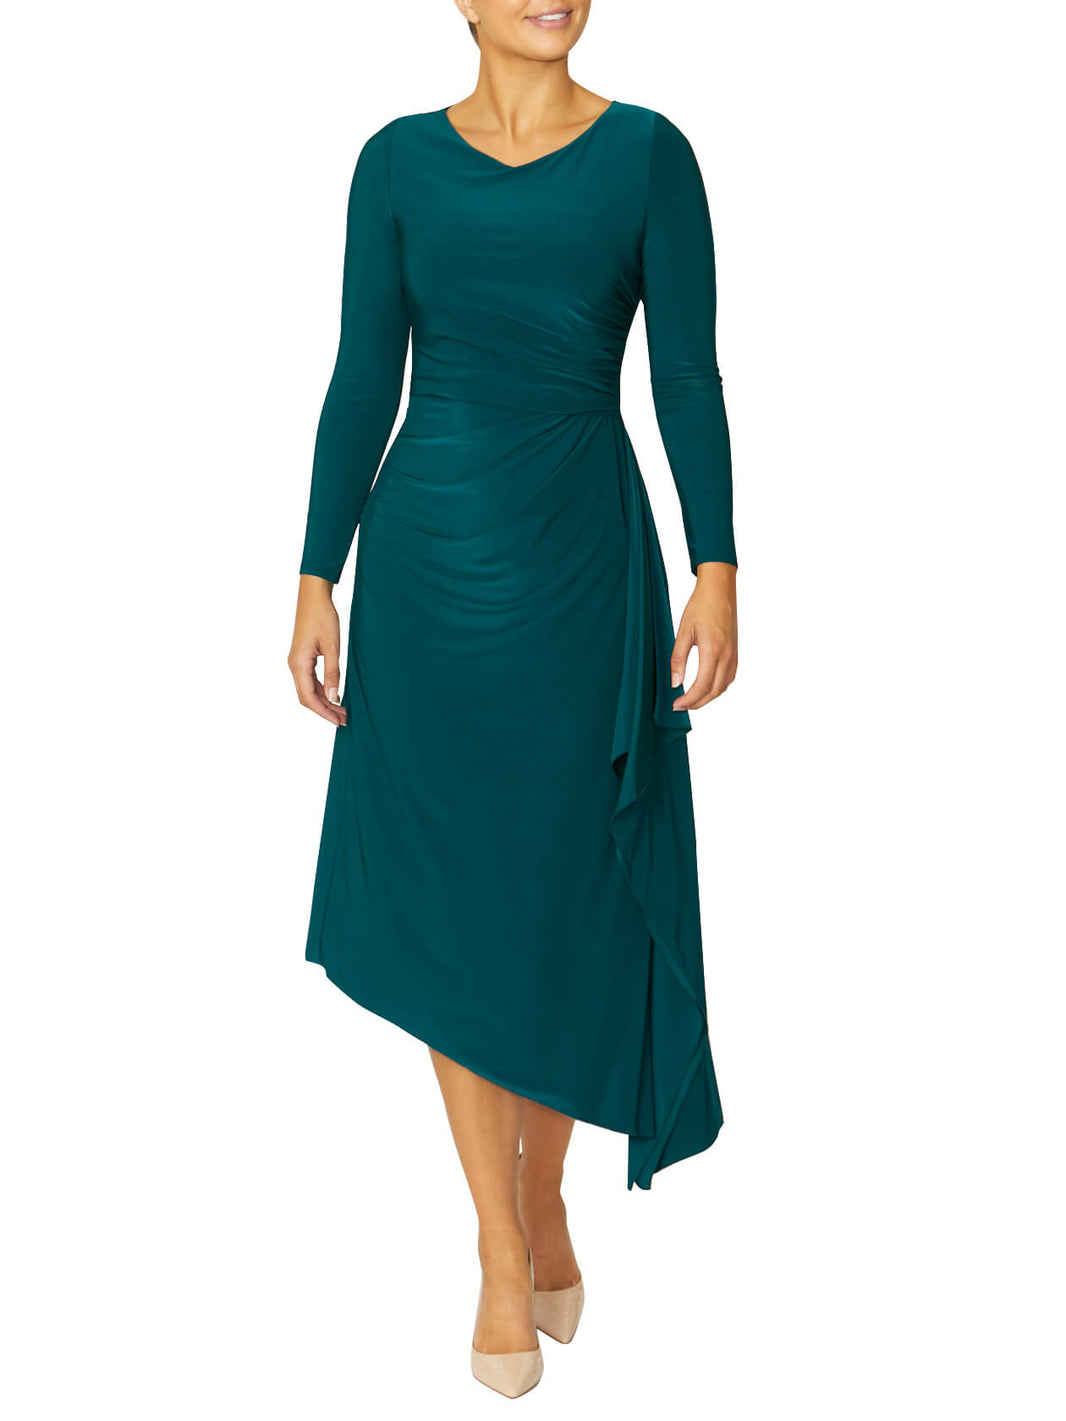 Jersey Dresses Online Australia | Stylish Jersey Dresses for Sale